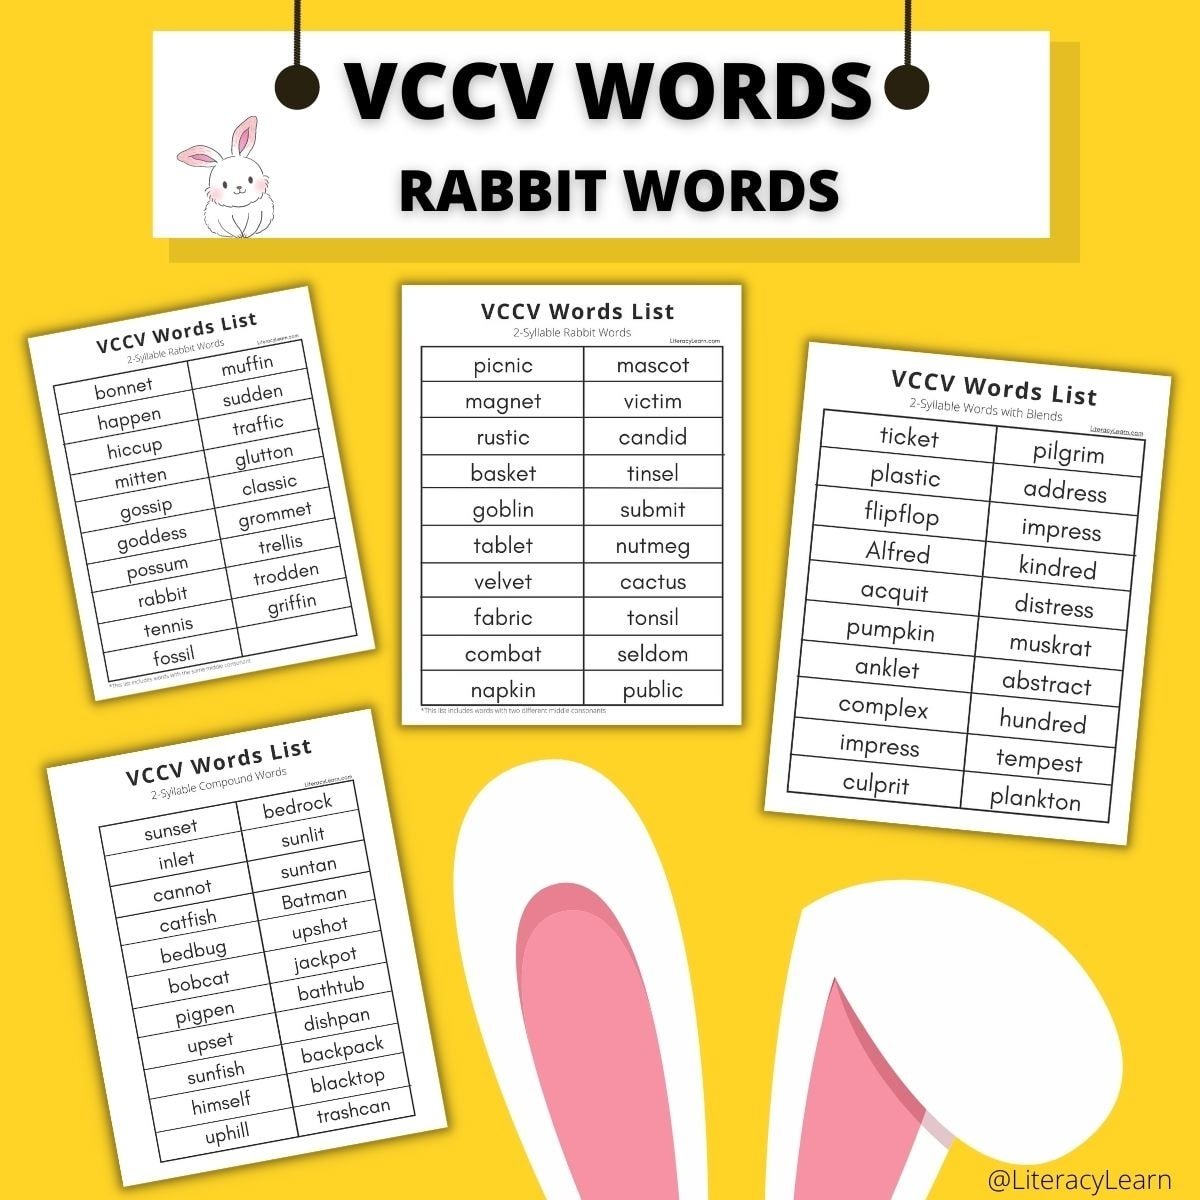 83-vccv-words-2-syllable-rabbit-words-list-literacy-learn